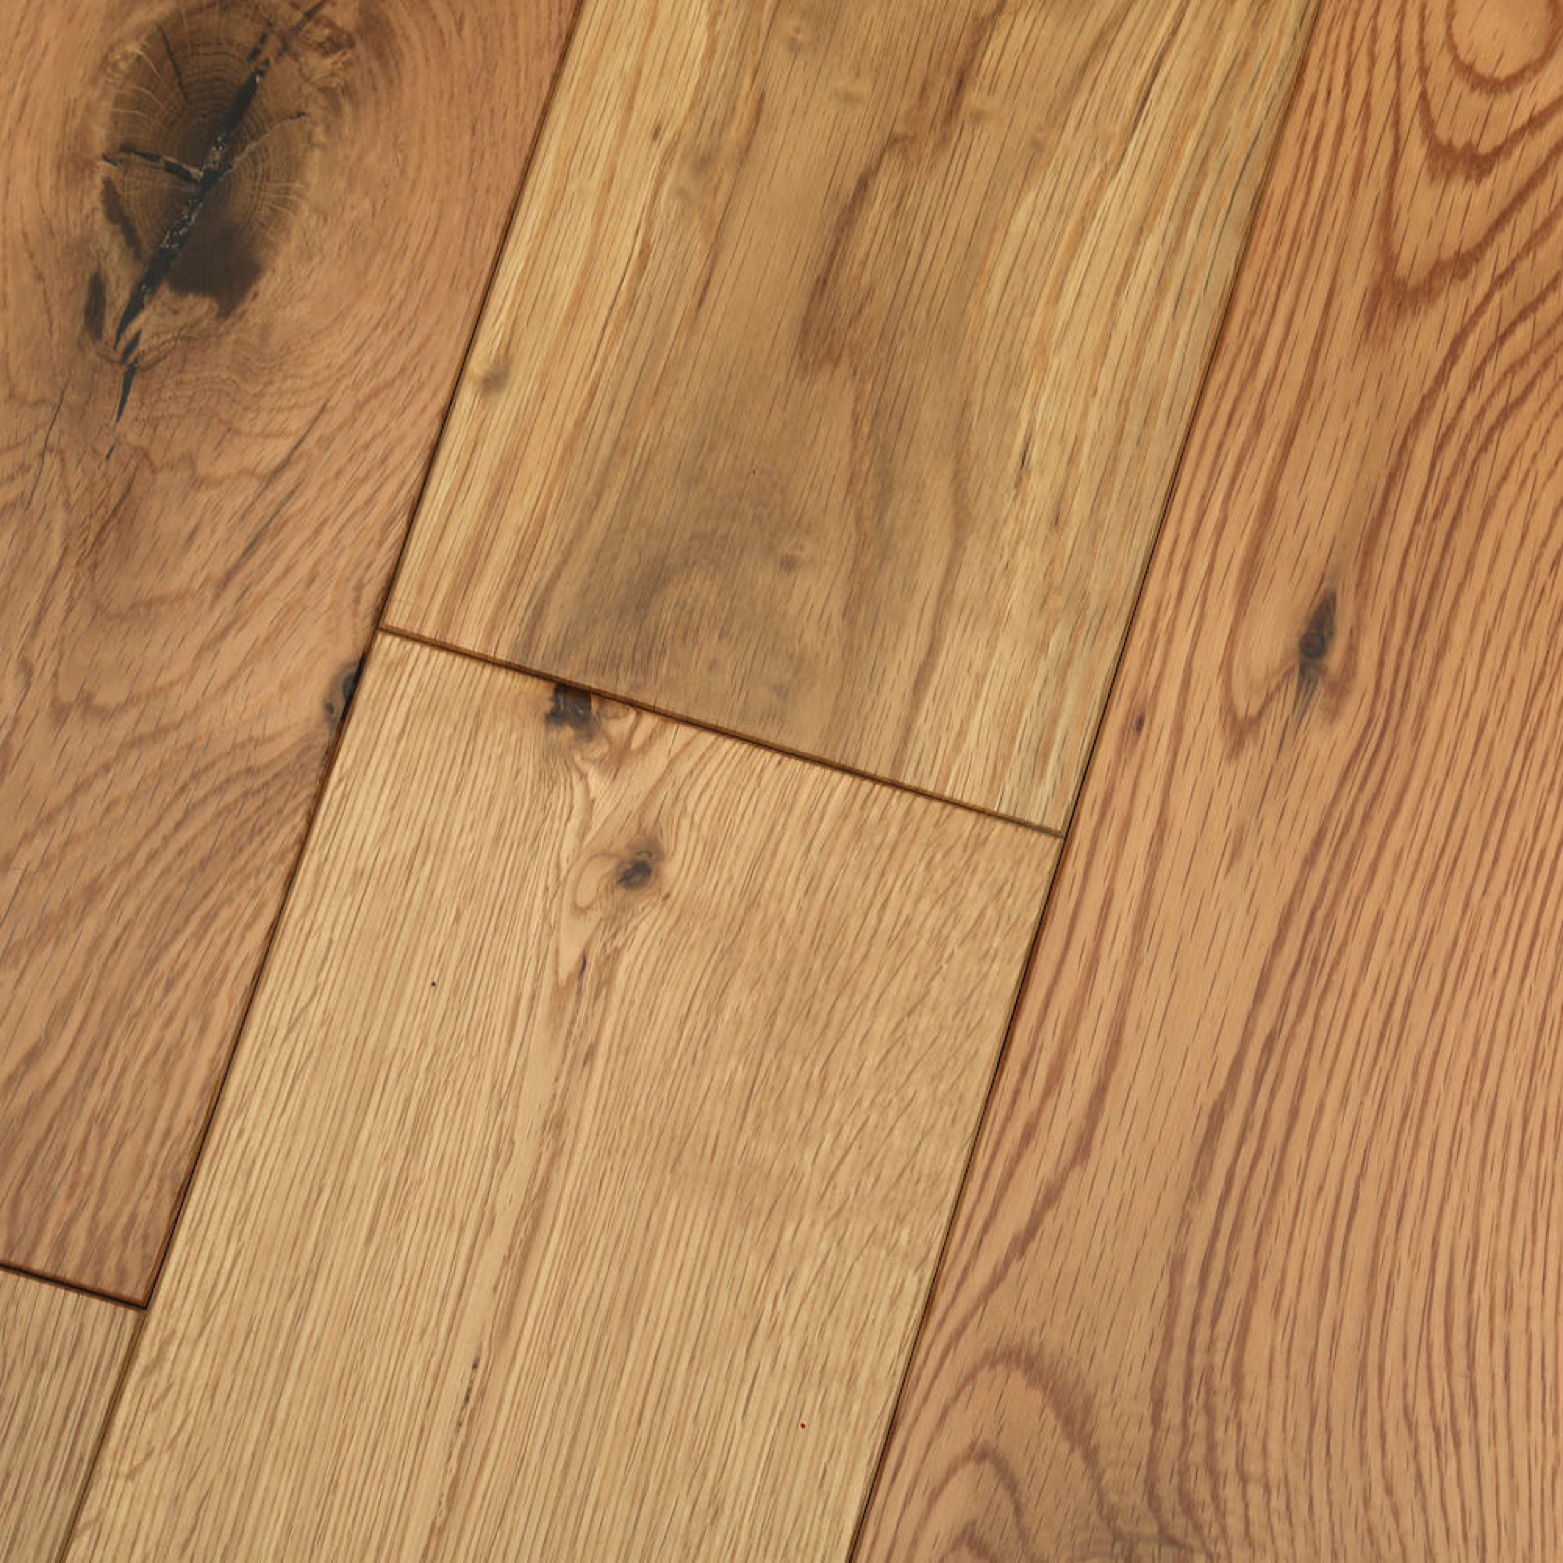 The Beautiful & Authentic Wood Floor Finish!